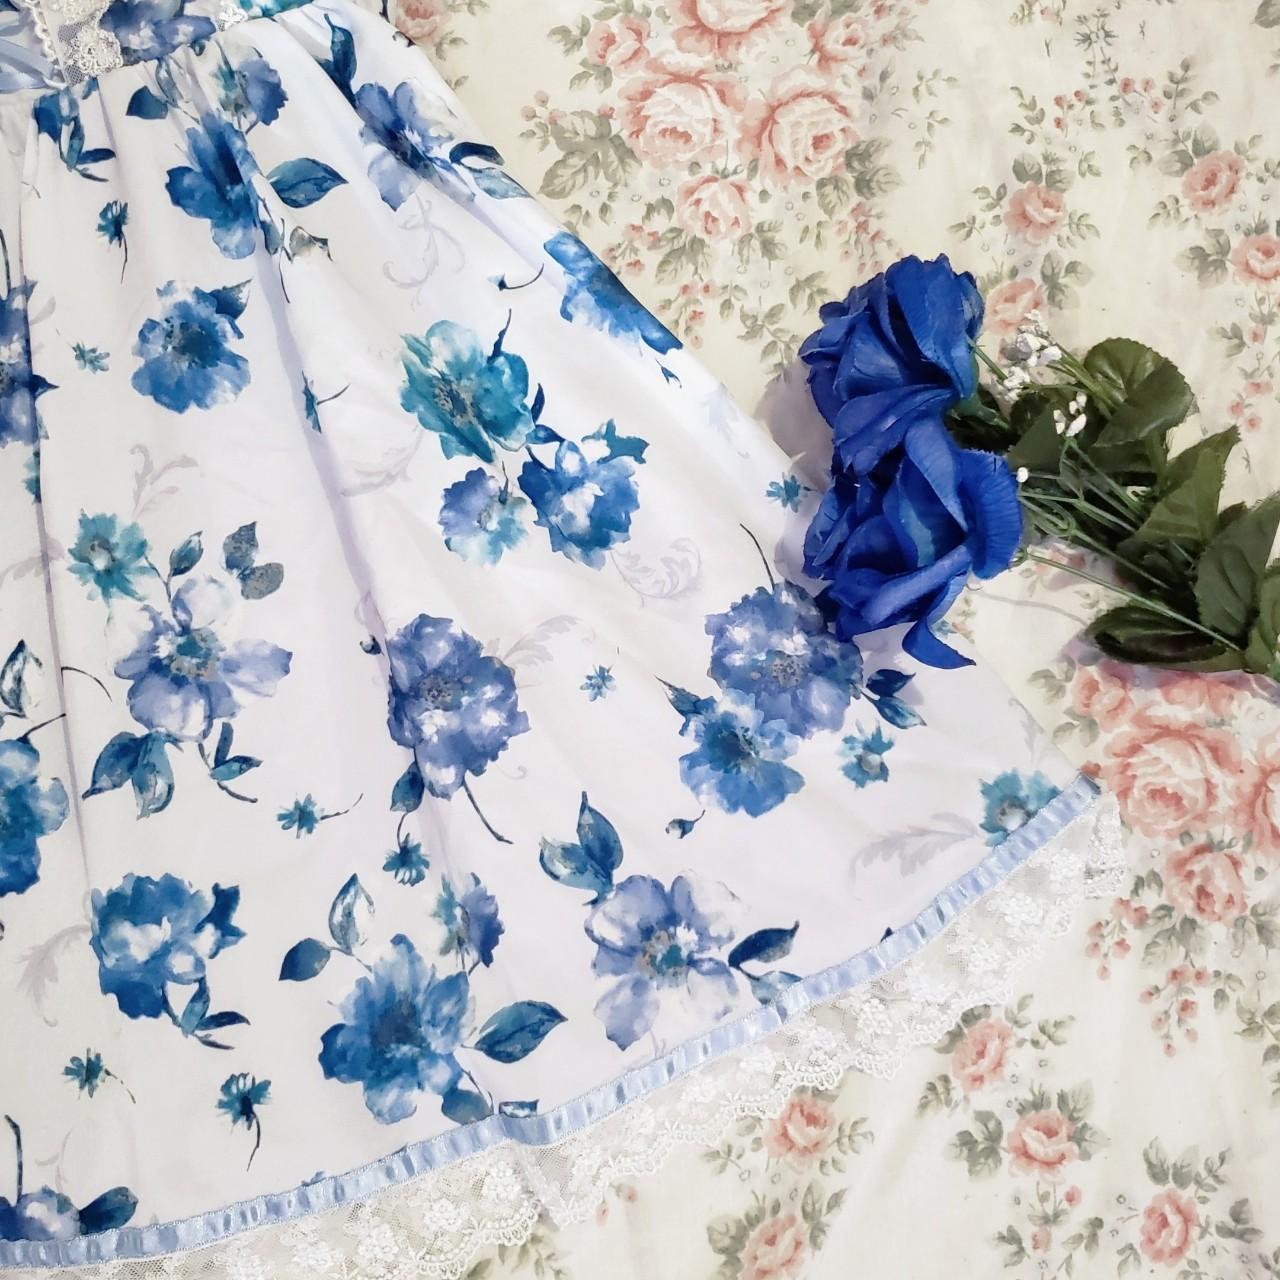 Blue floral corset dress ♡ Axes Femme